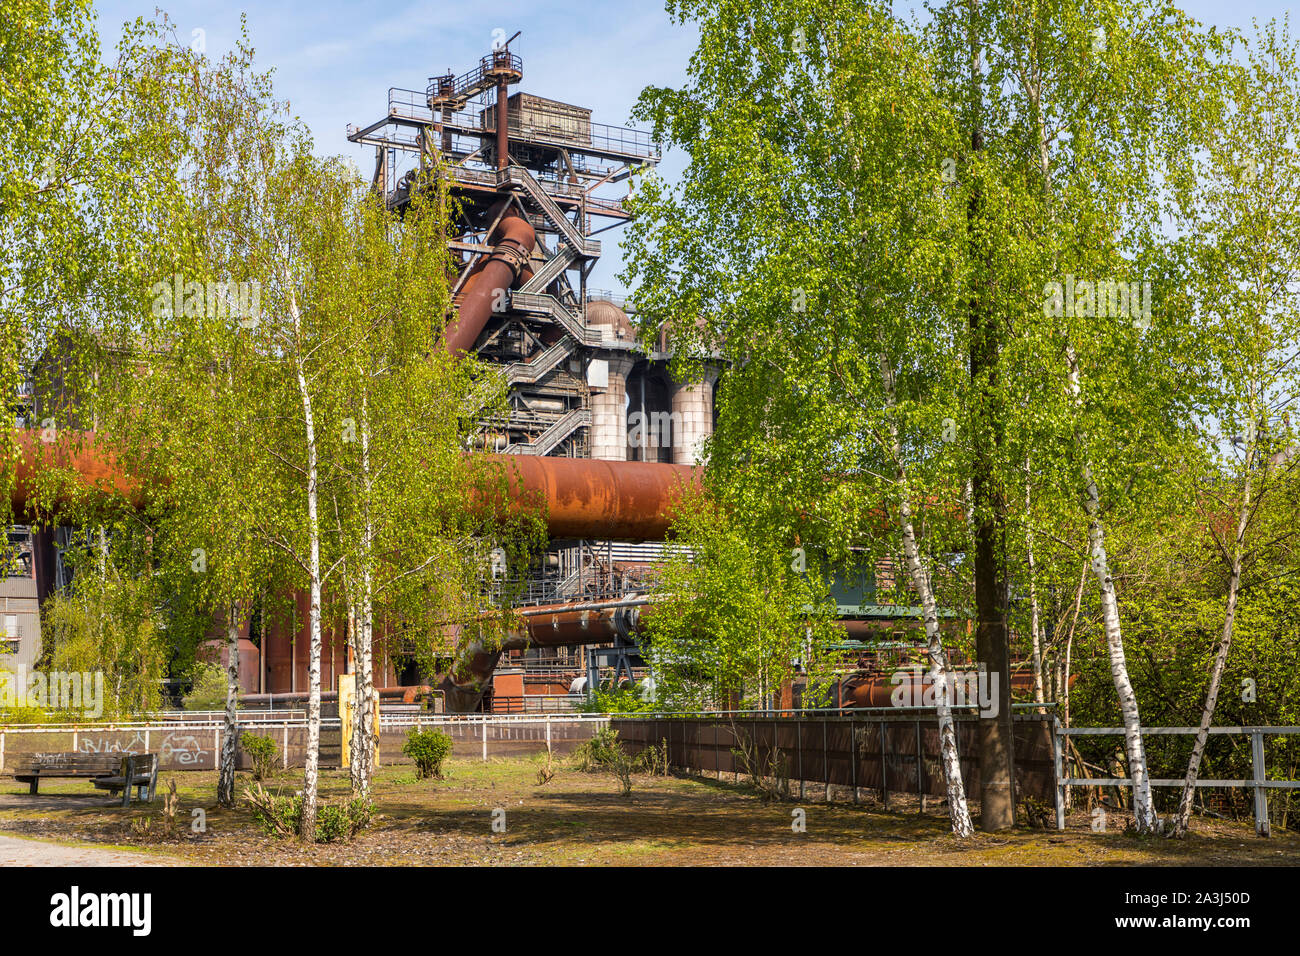 Duisburg Landscape Park, North, former steel mill, in Duisburg Meidrich, blast furnace 5, Germany Stock Photo